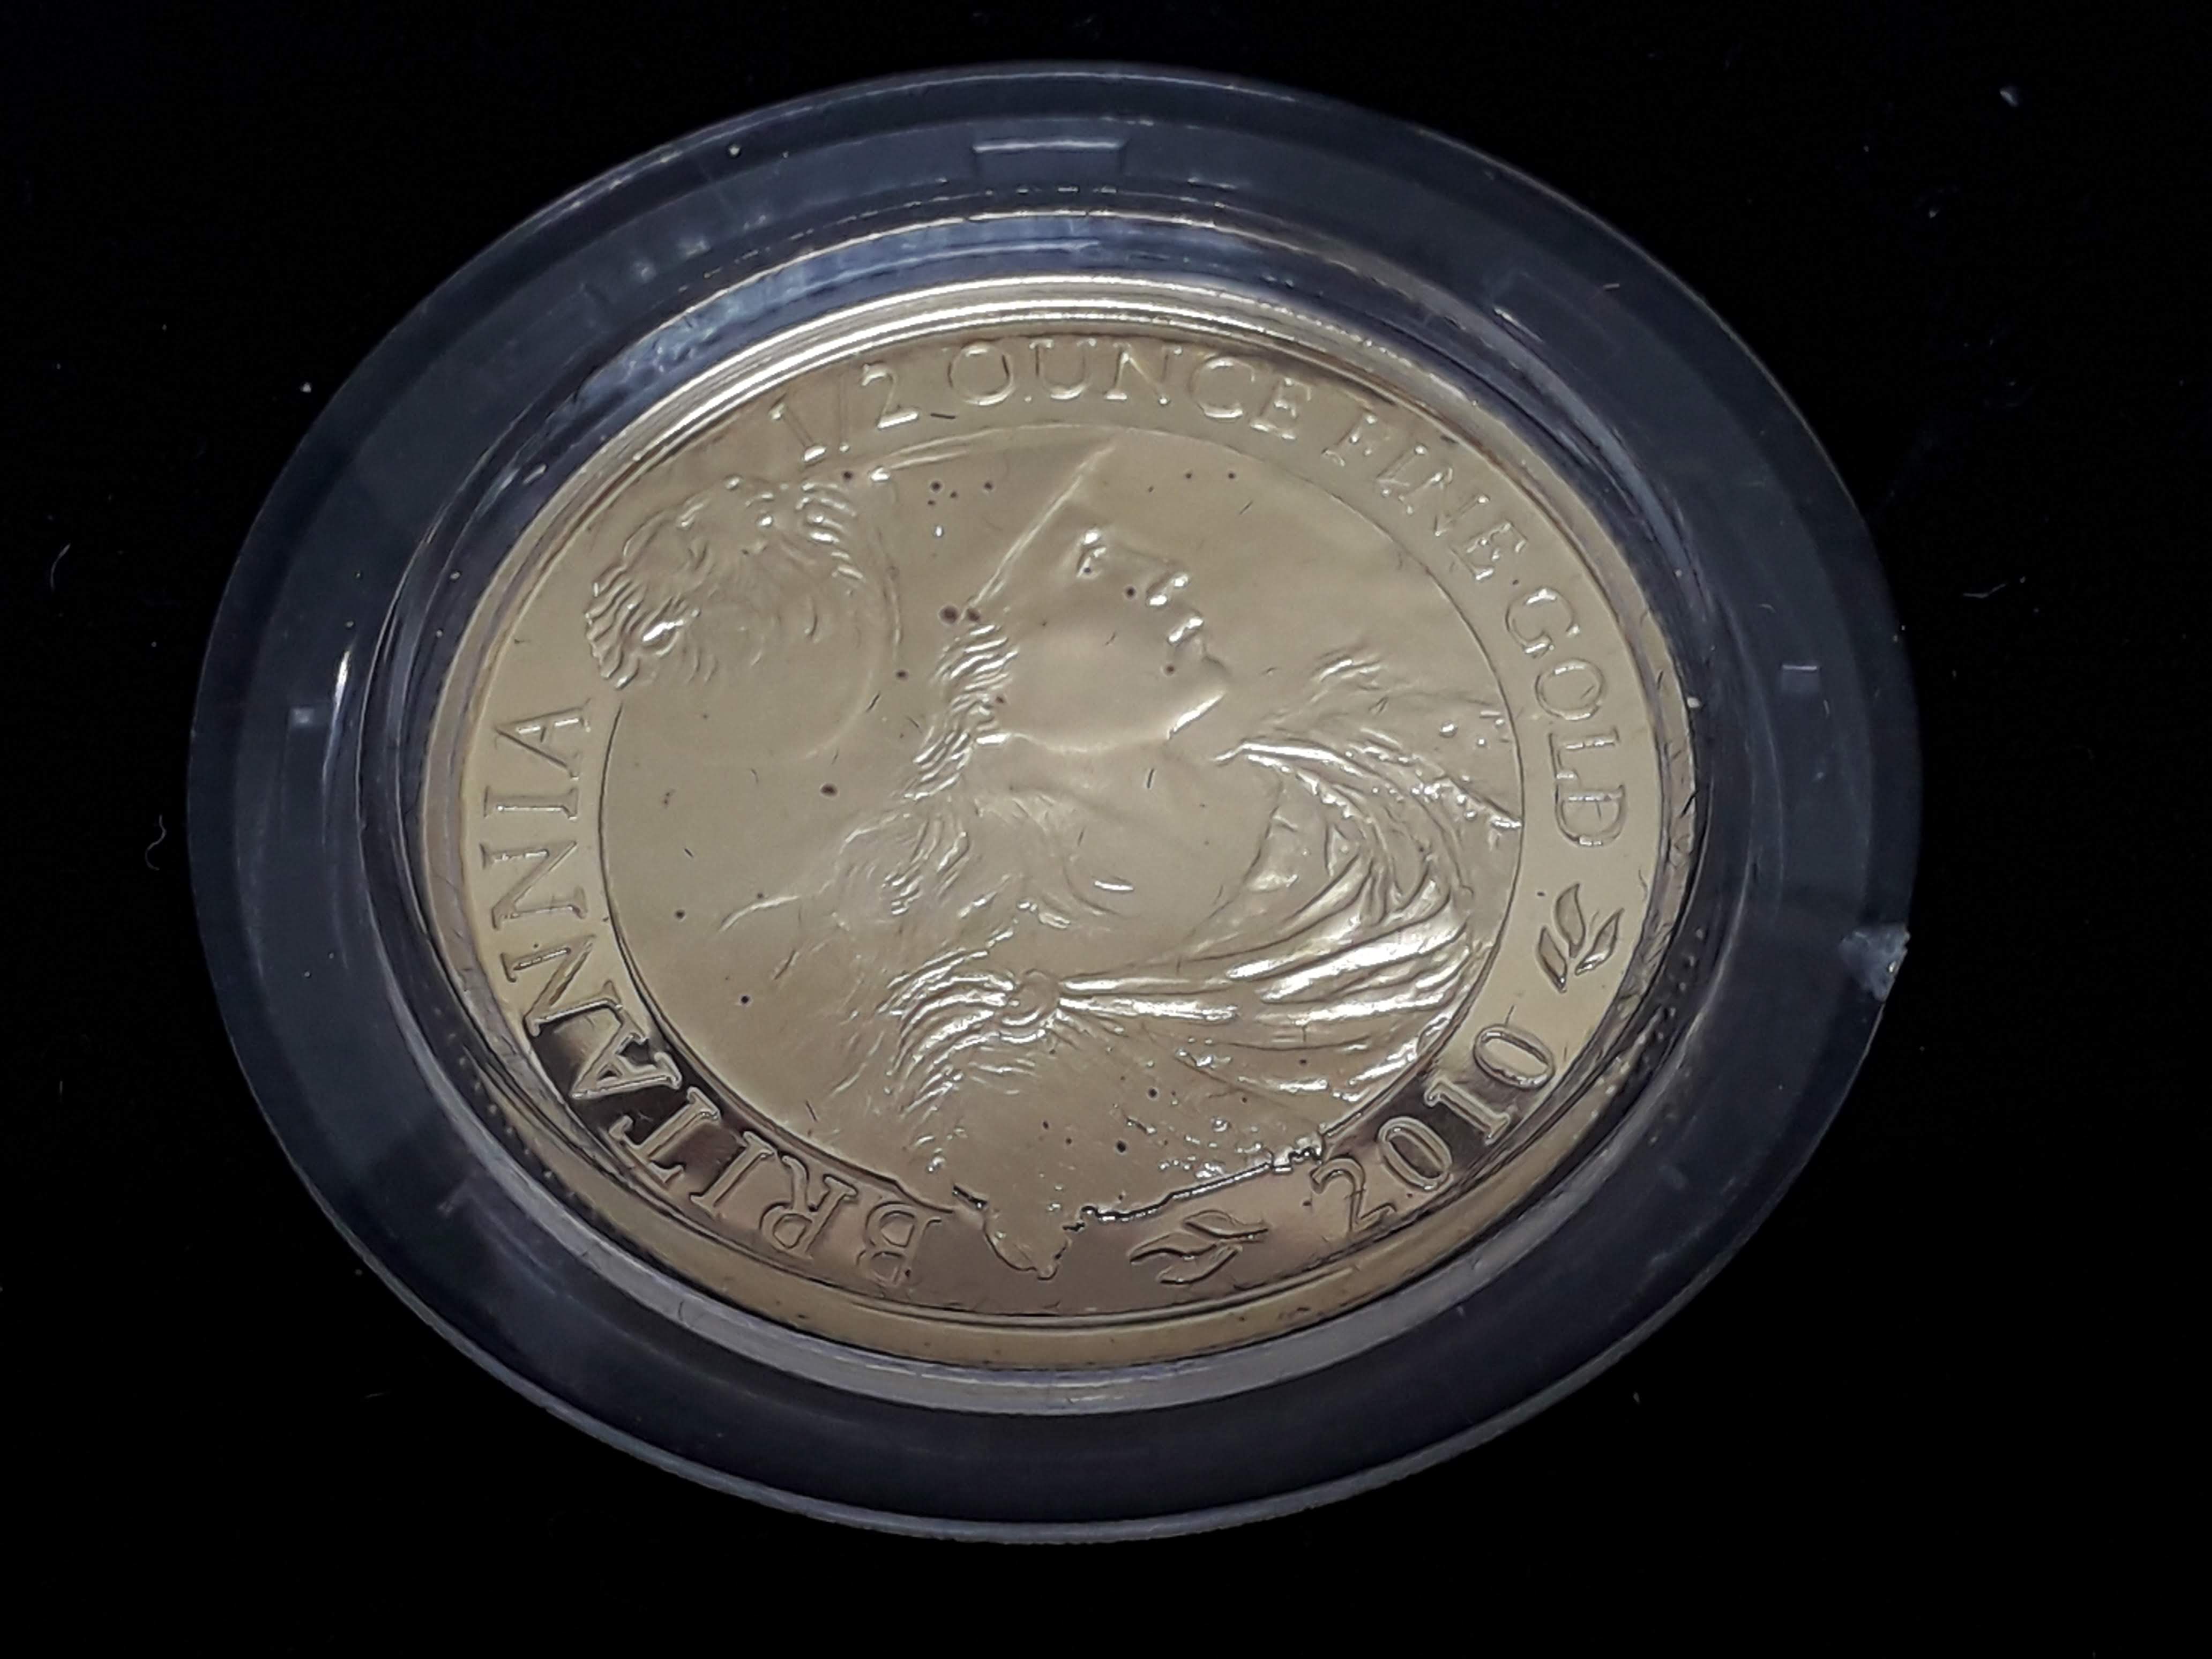 Elizabeth II Royal Mint 2010 Britannia Three Coin Gold Proof Set comprising £10, £25 & £50, 0.9167 - Image 2 of 7